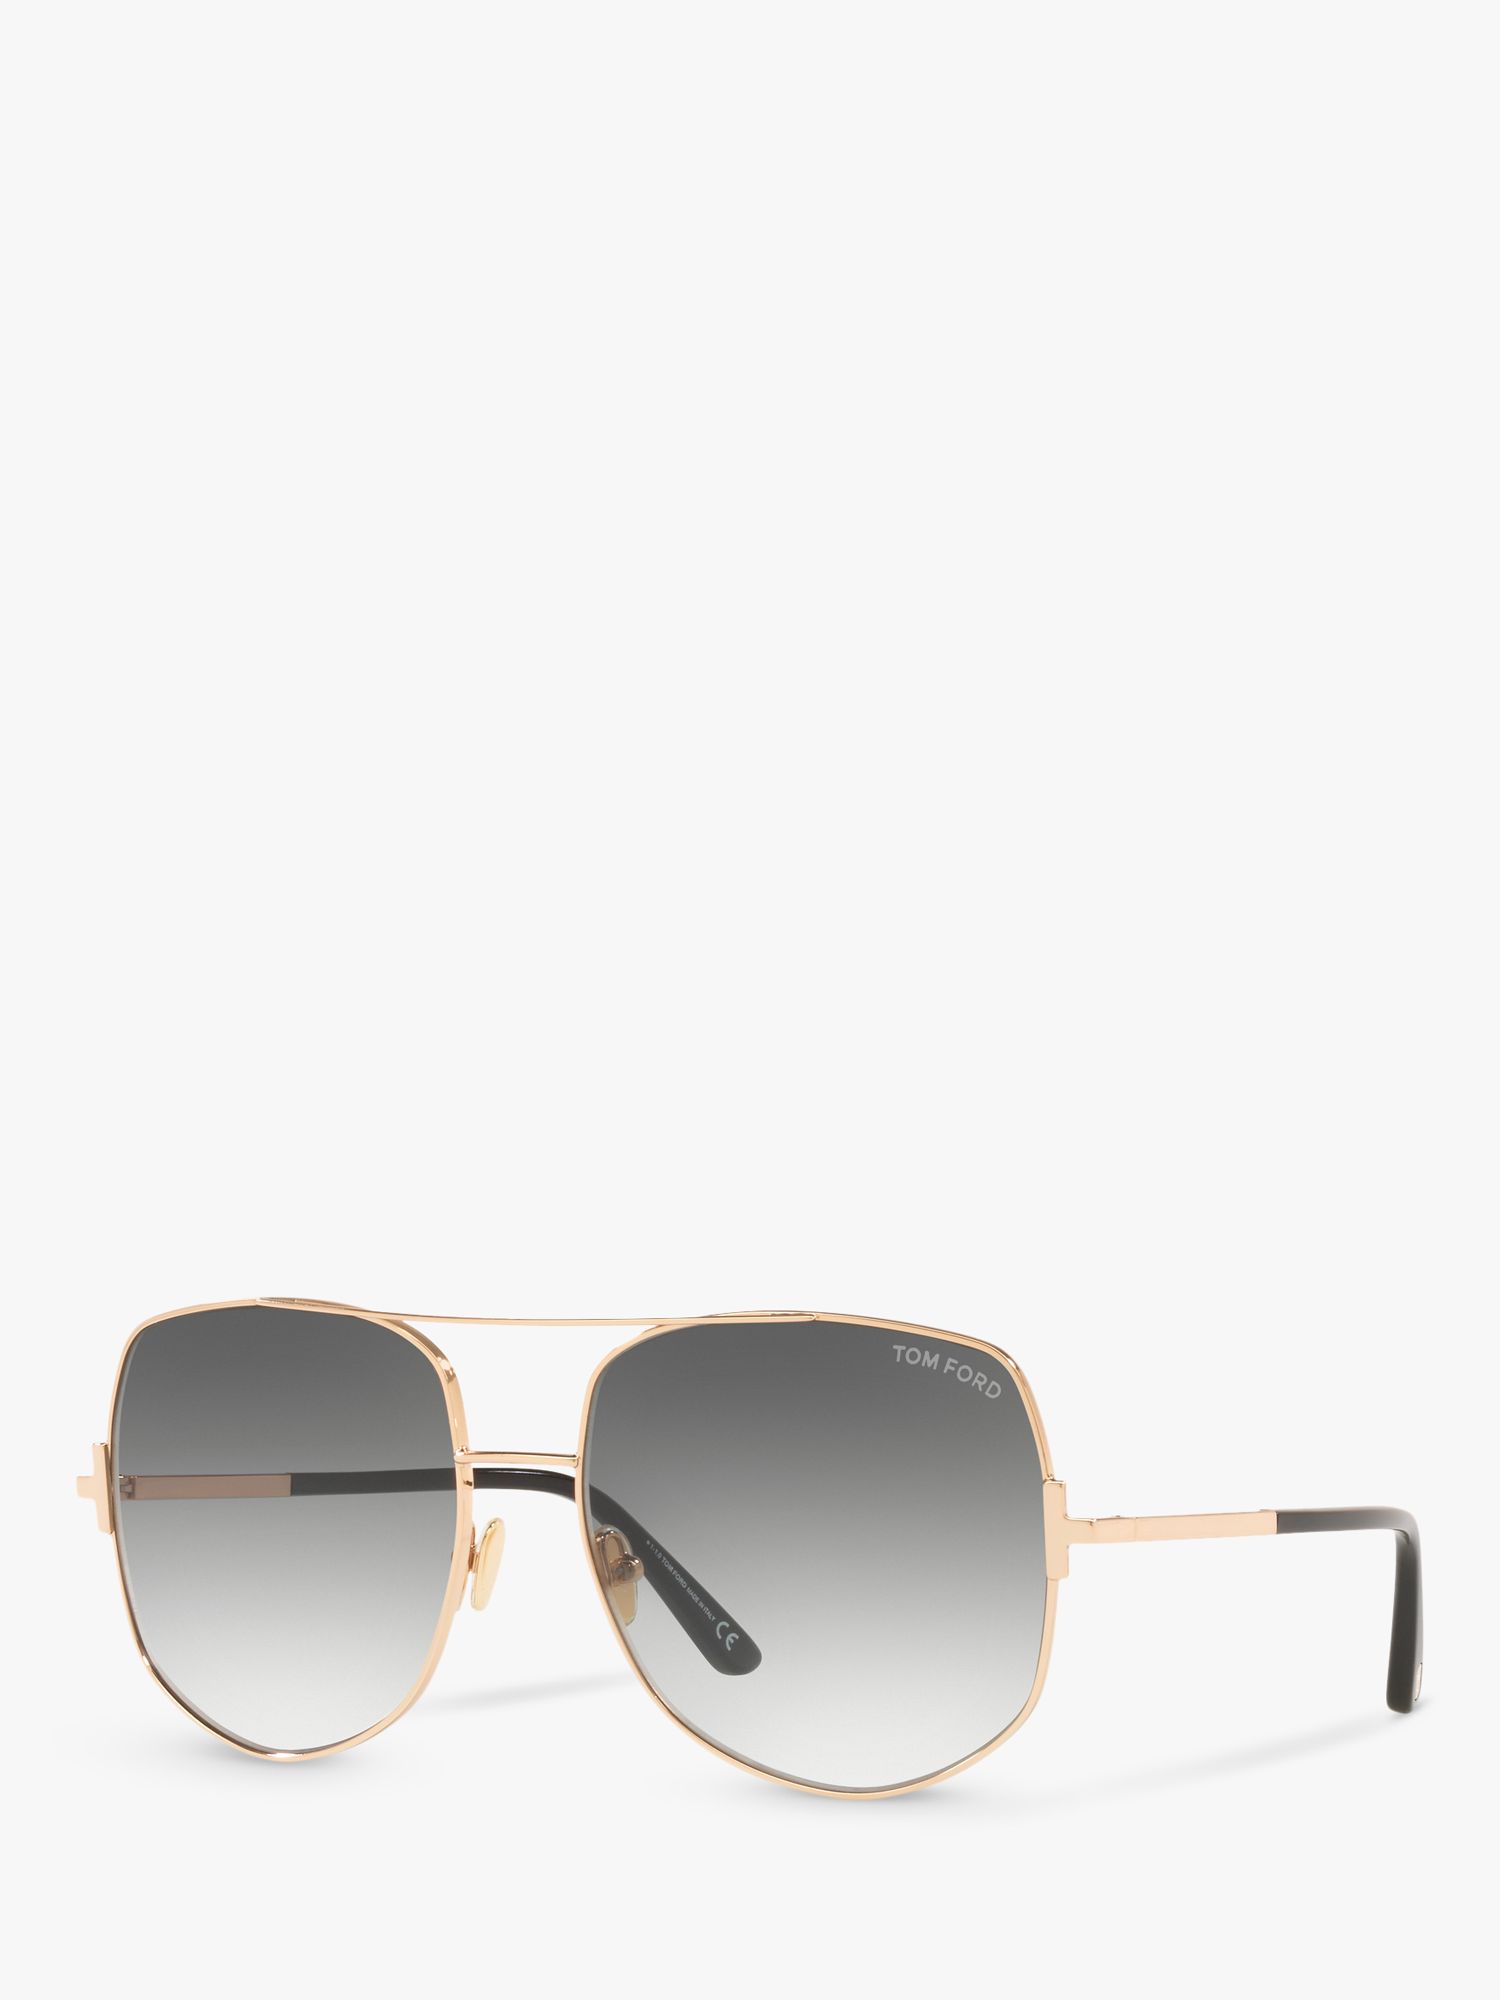 TOM FORD - Sunglasses | John Lewis & Partners